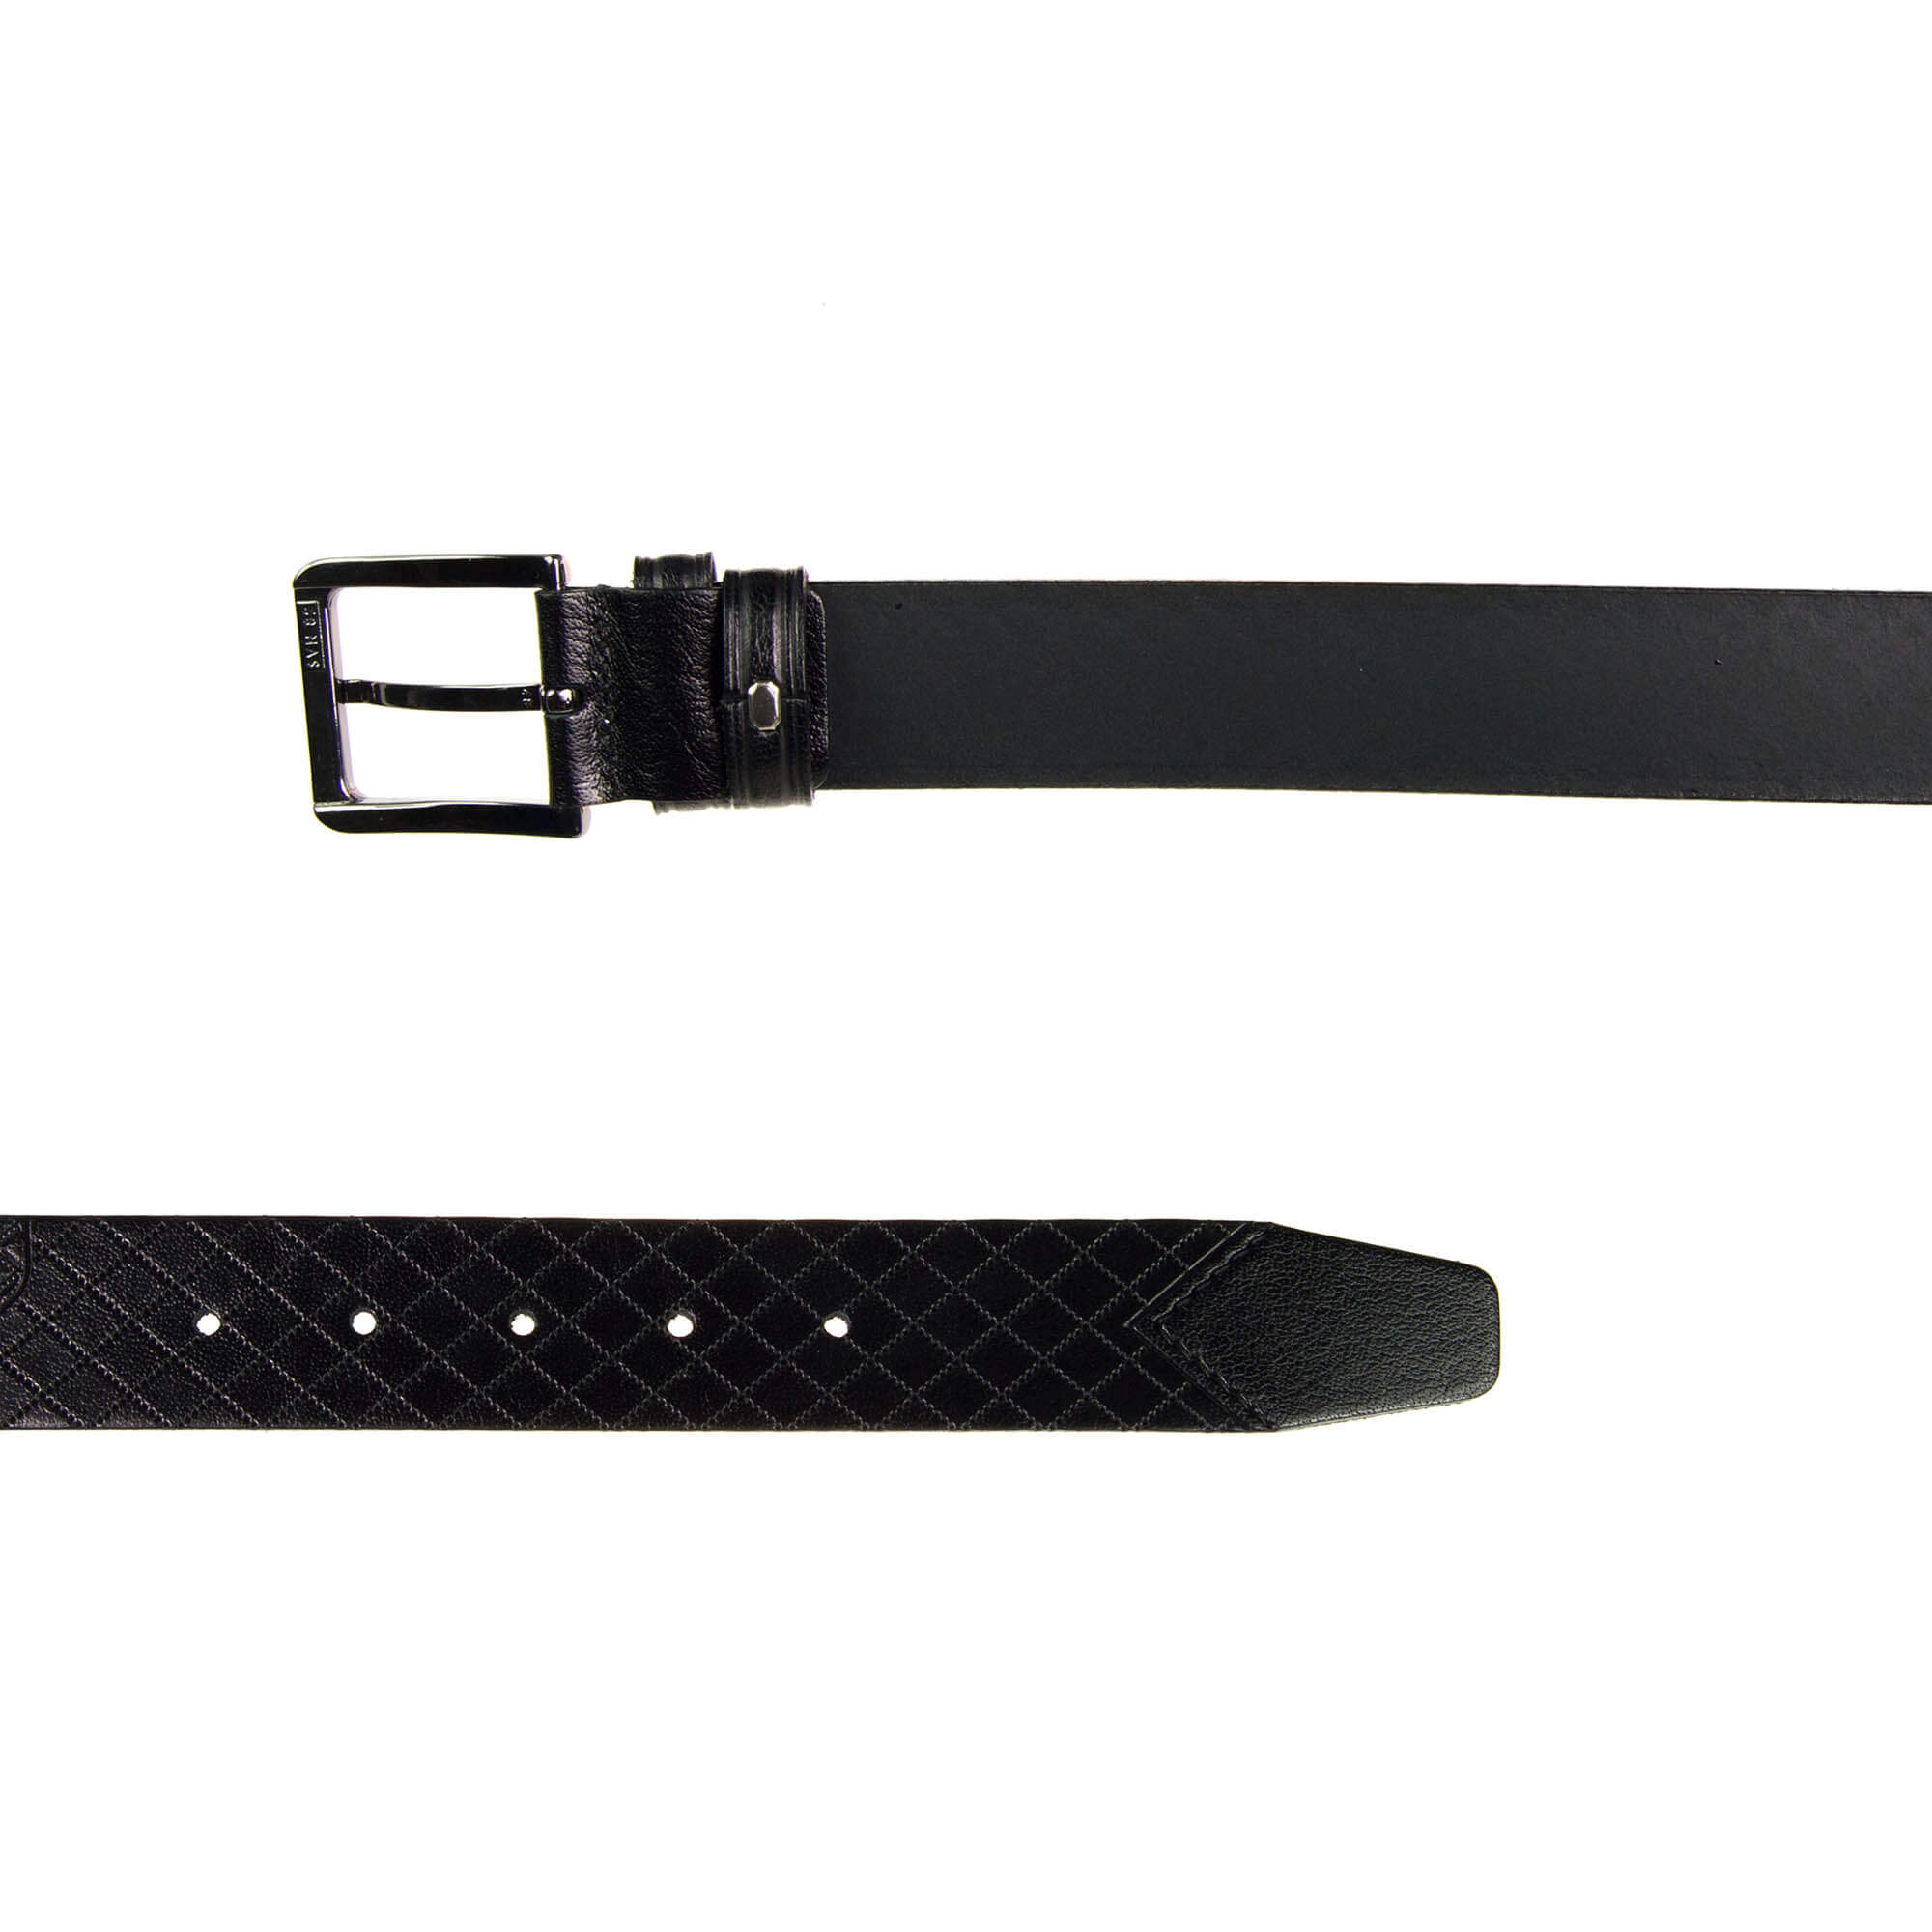 Buy Luxury Mens Belts - Black Quilted Leather - LeatherBeltsOnline